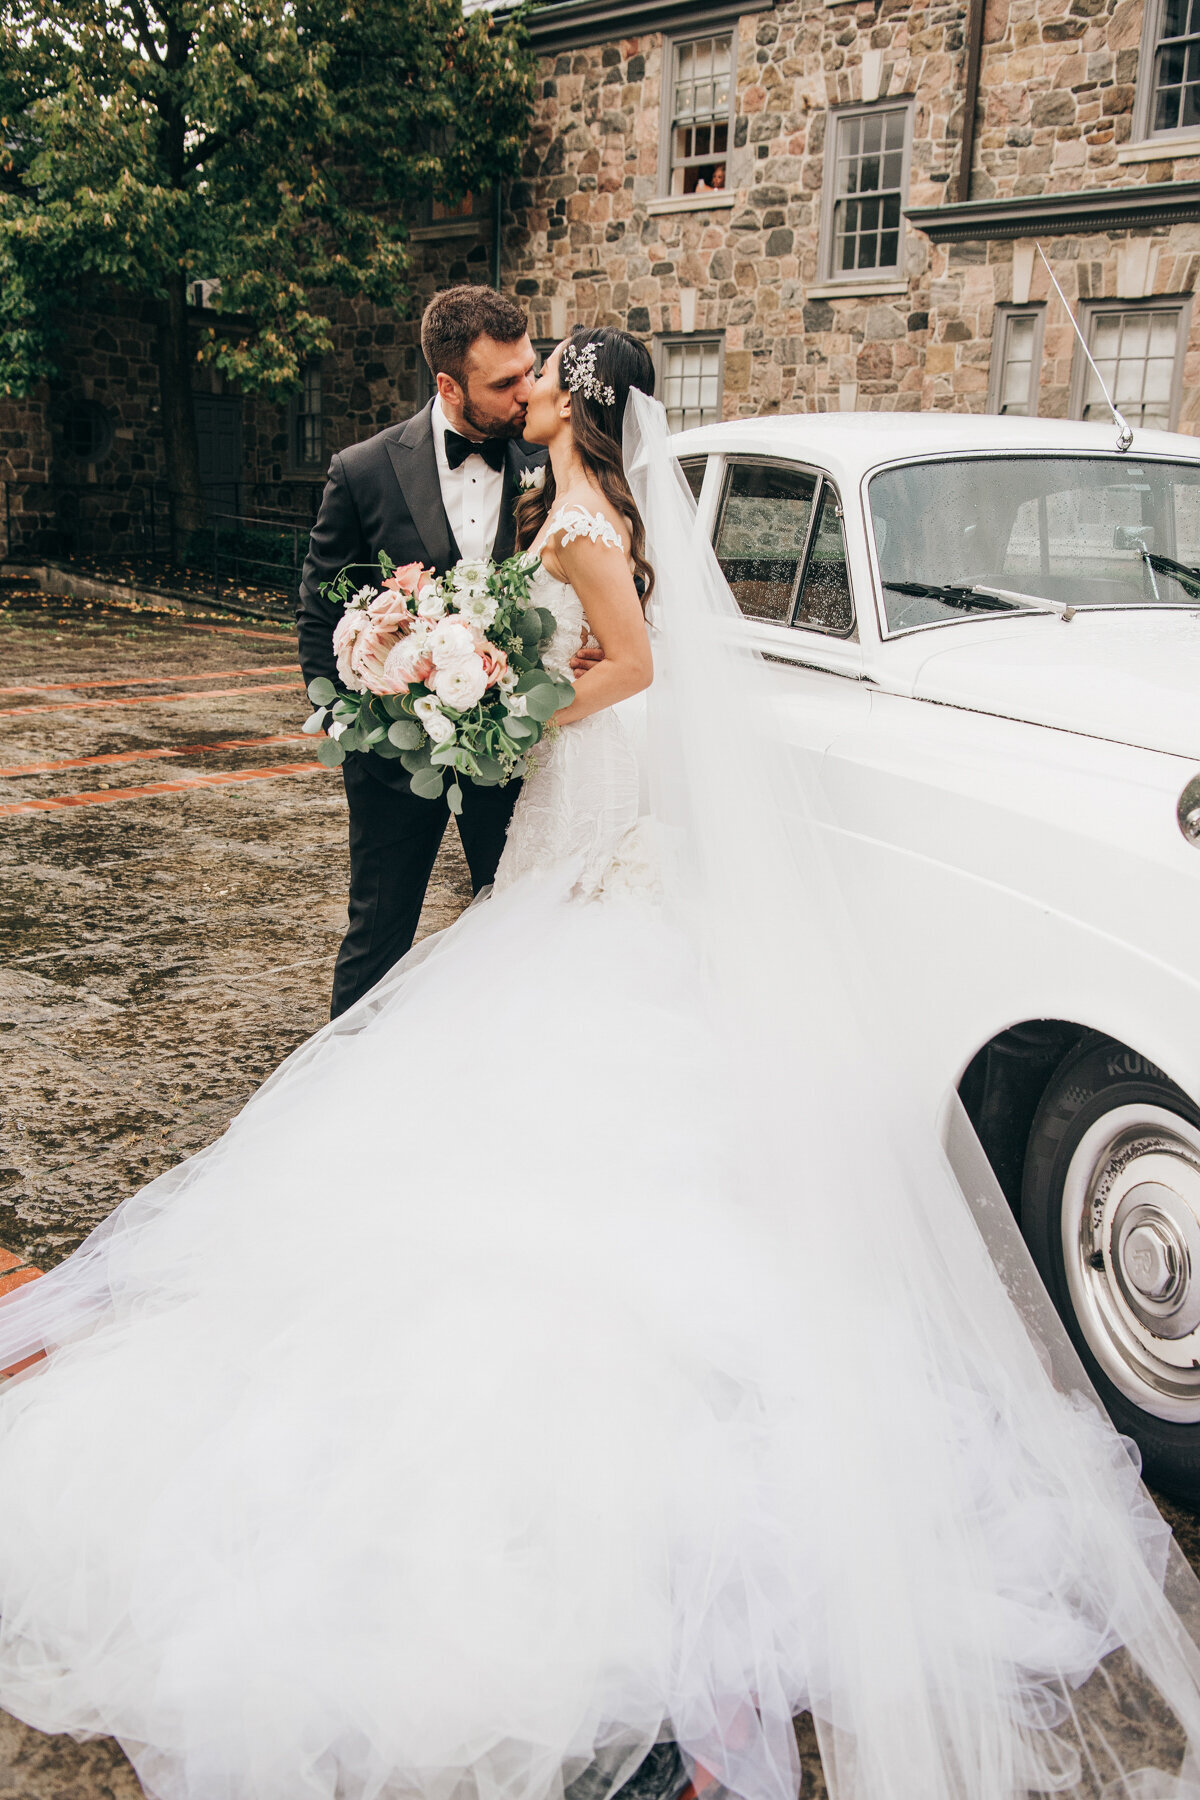 Bride and groom kiss in front of Rolls Royce getaway car